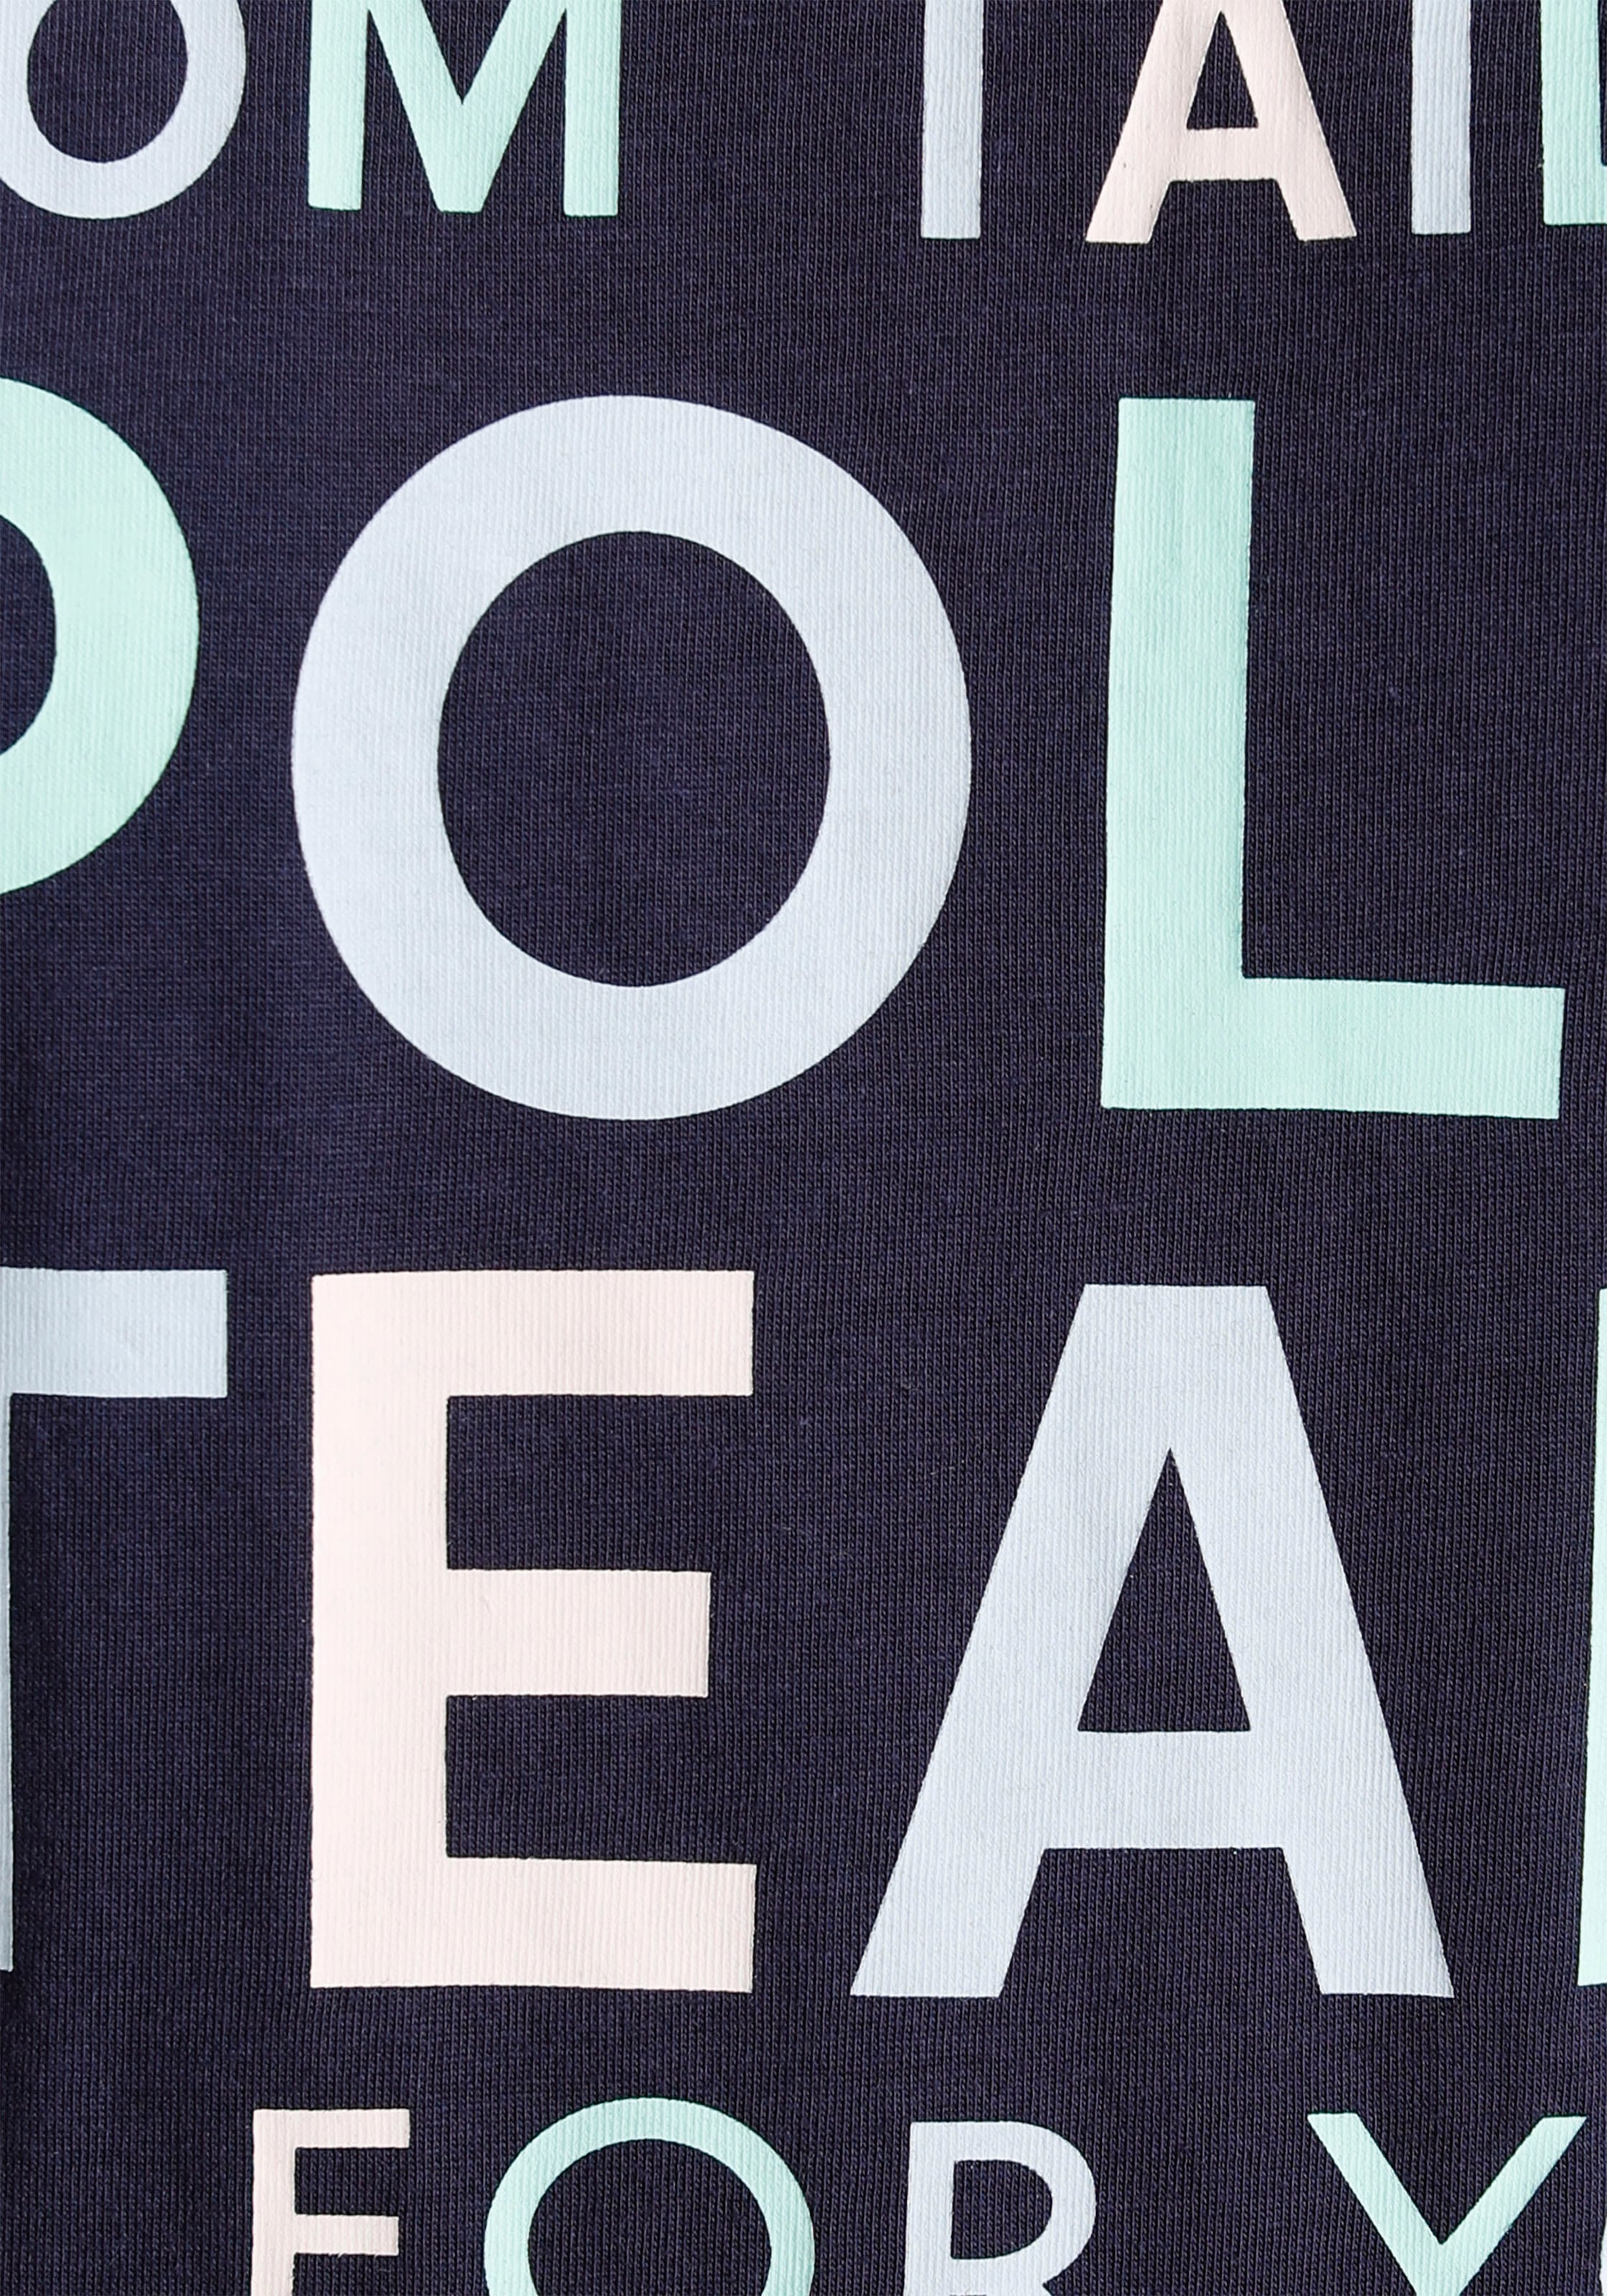 TOM TAILOR Polo Team Print-Shirt, großem farbenfrohen Logo-Print bestellen  | BAUR